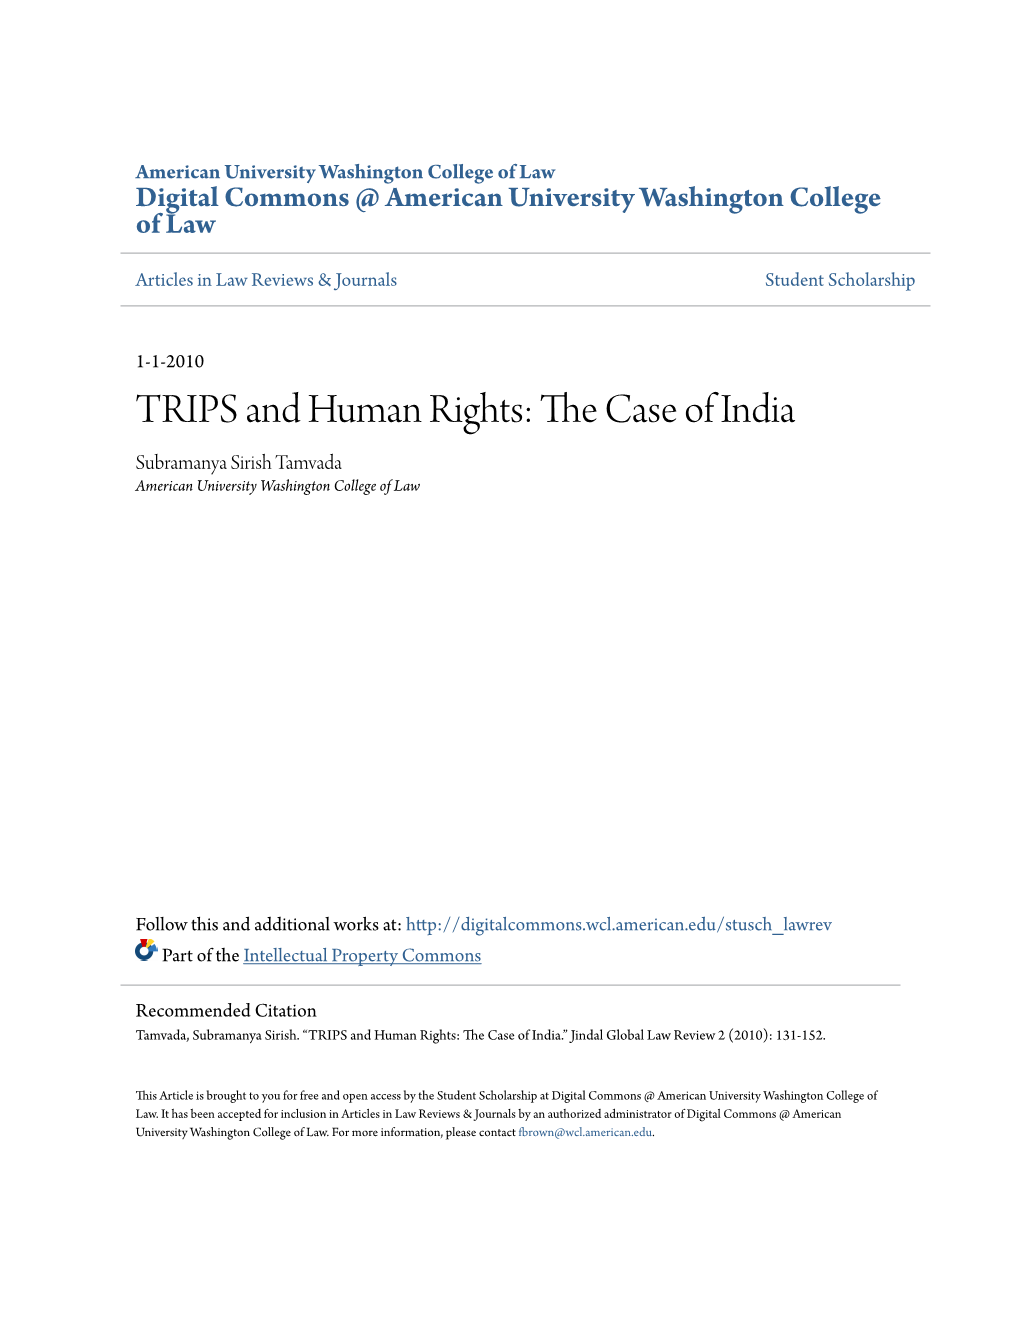 TRIPS and Human Rights: the Ac Se of India Subramanya Sirish Tamvada American University Washington College of Law